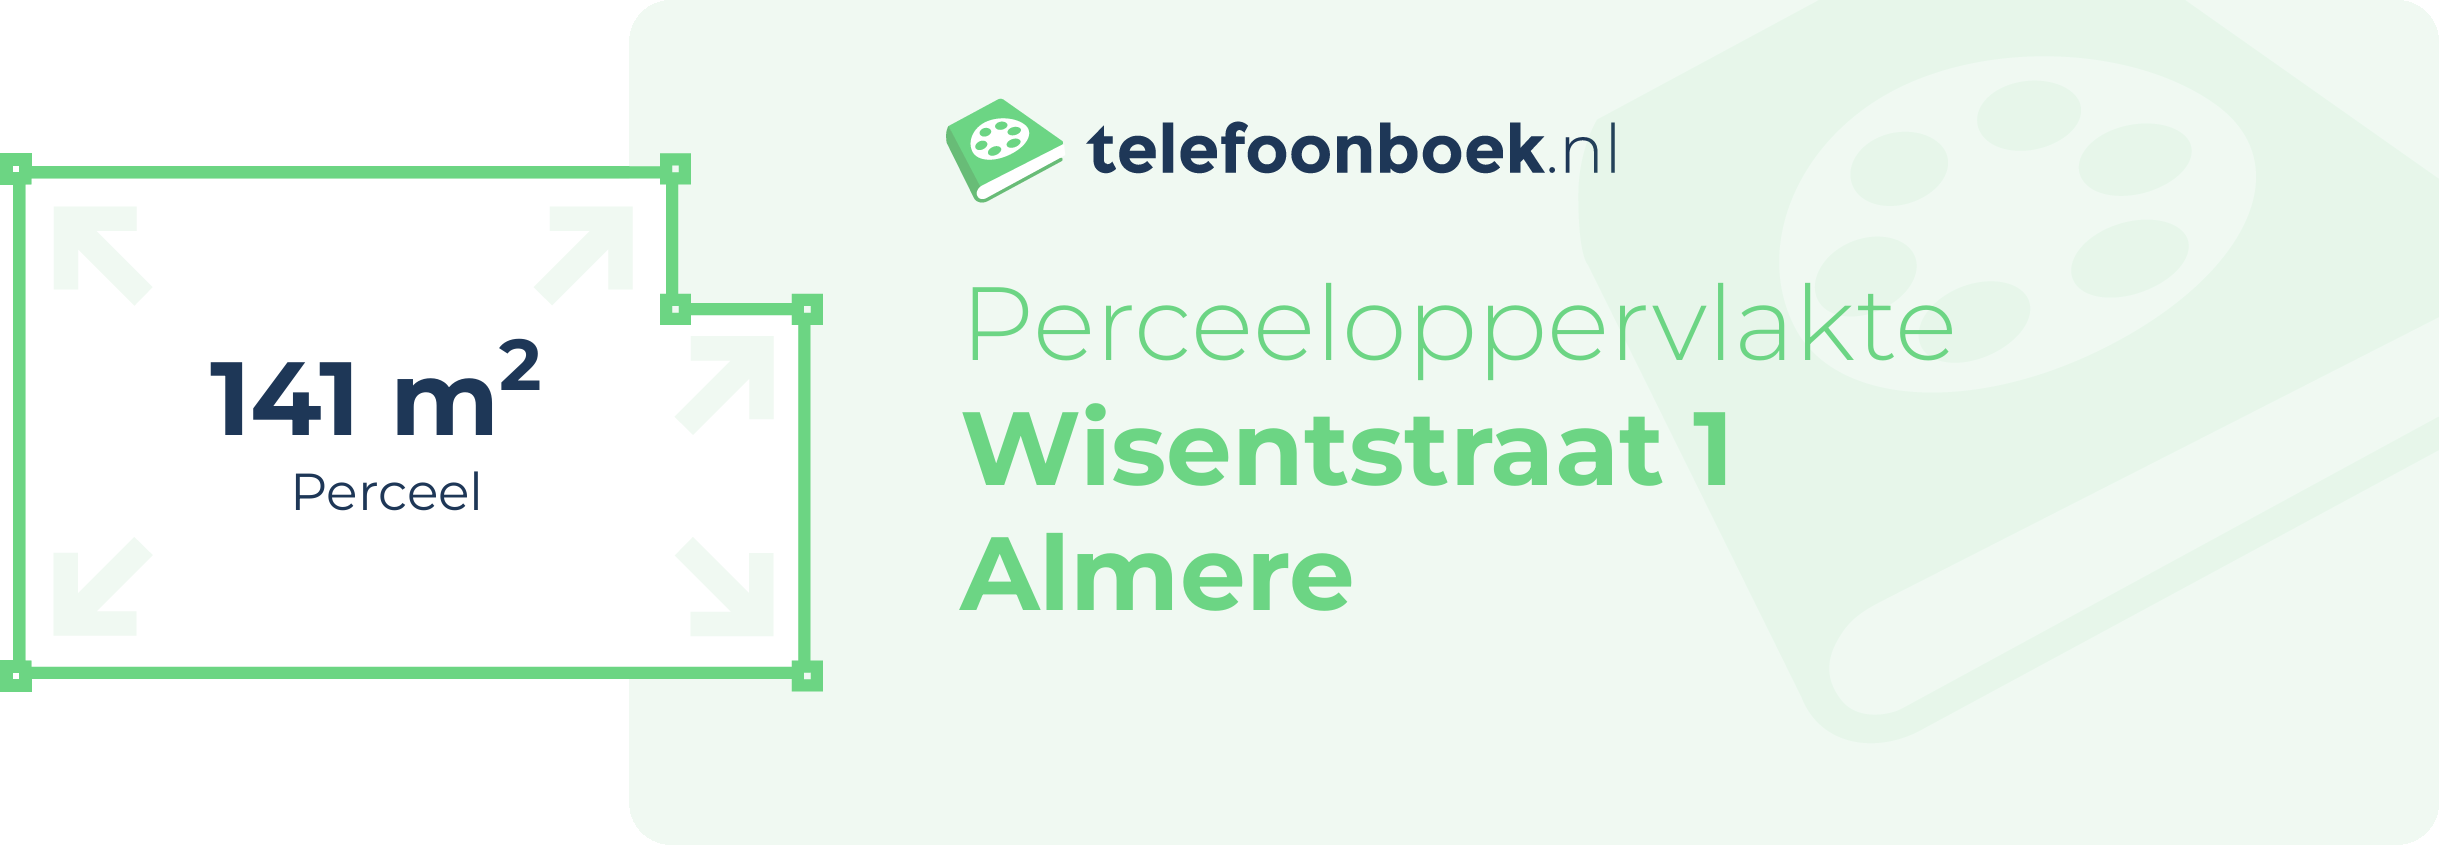 Perceeloppervlakte Wisentstraat 1 Almere